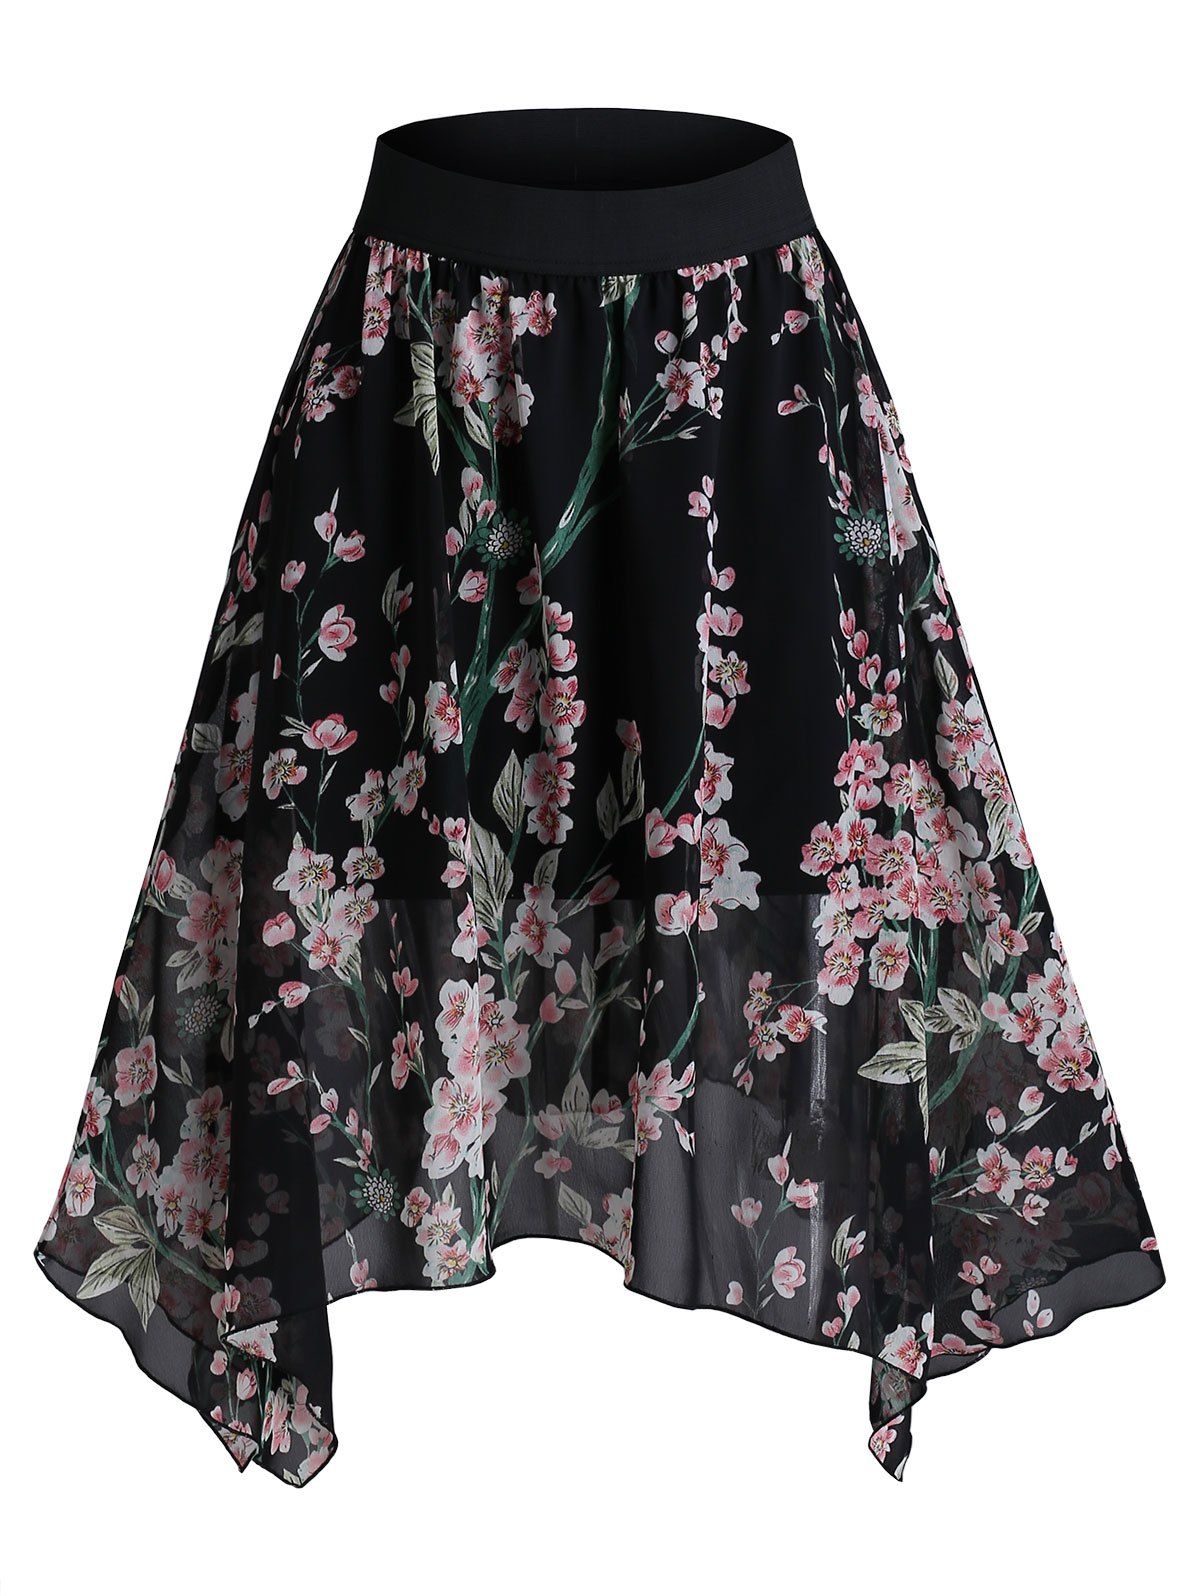 Floral Print Handkerchief Chiffon Skirt - BLACK M